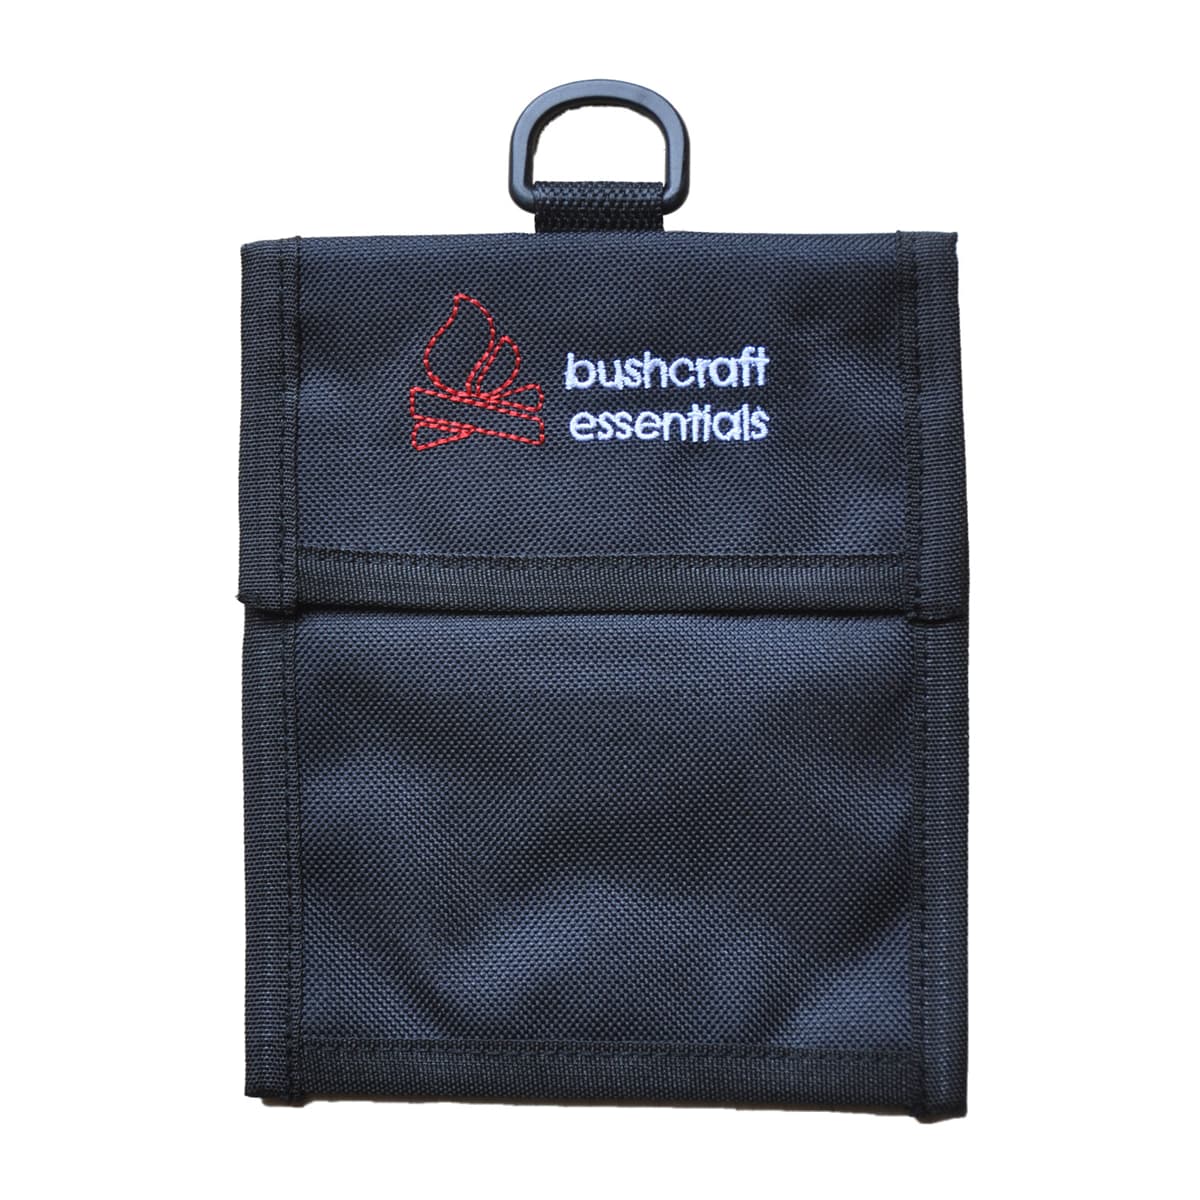 Heavy Duty Outdoor Bag for Bushbox LF, Bushbox Ultralight, and Bushbox Stoves